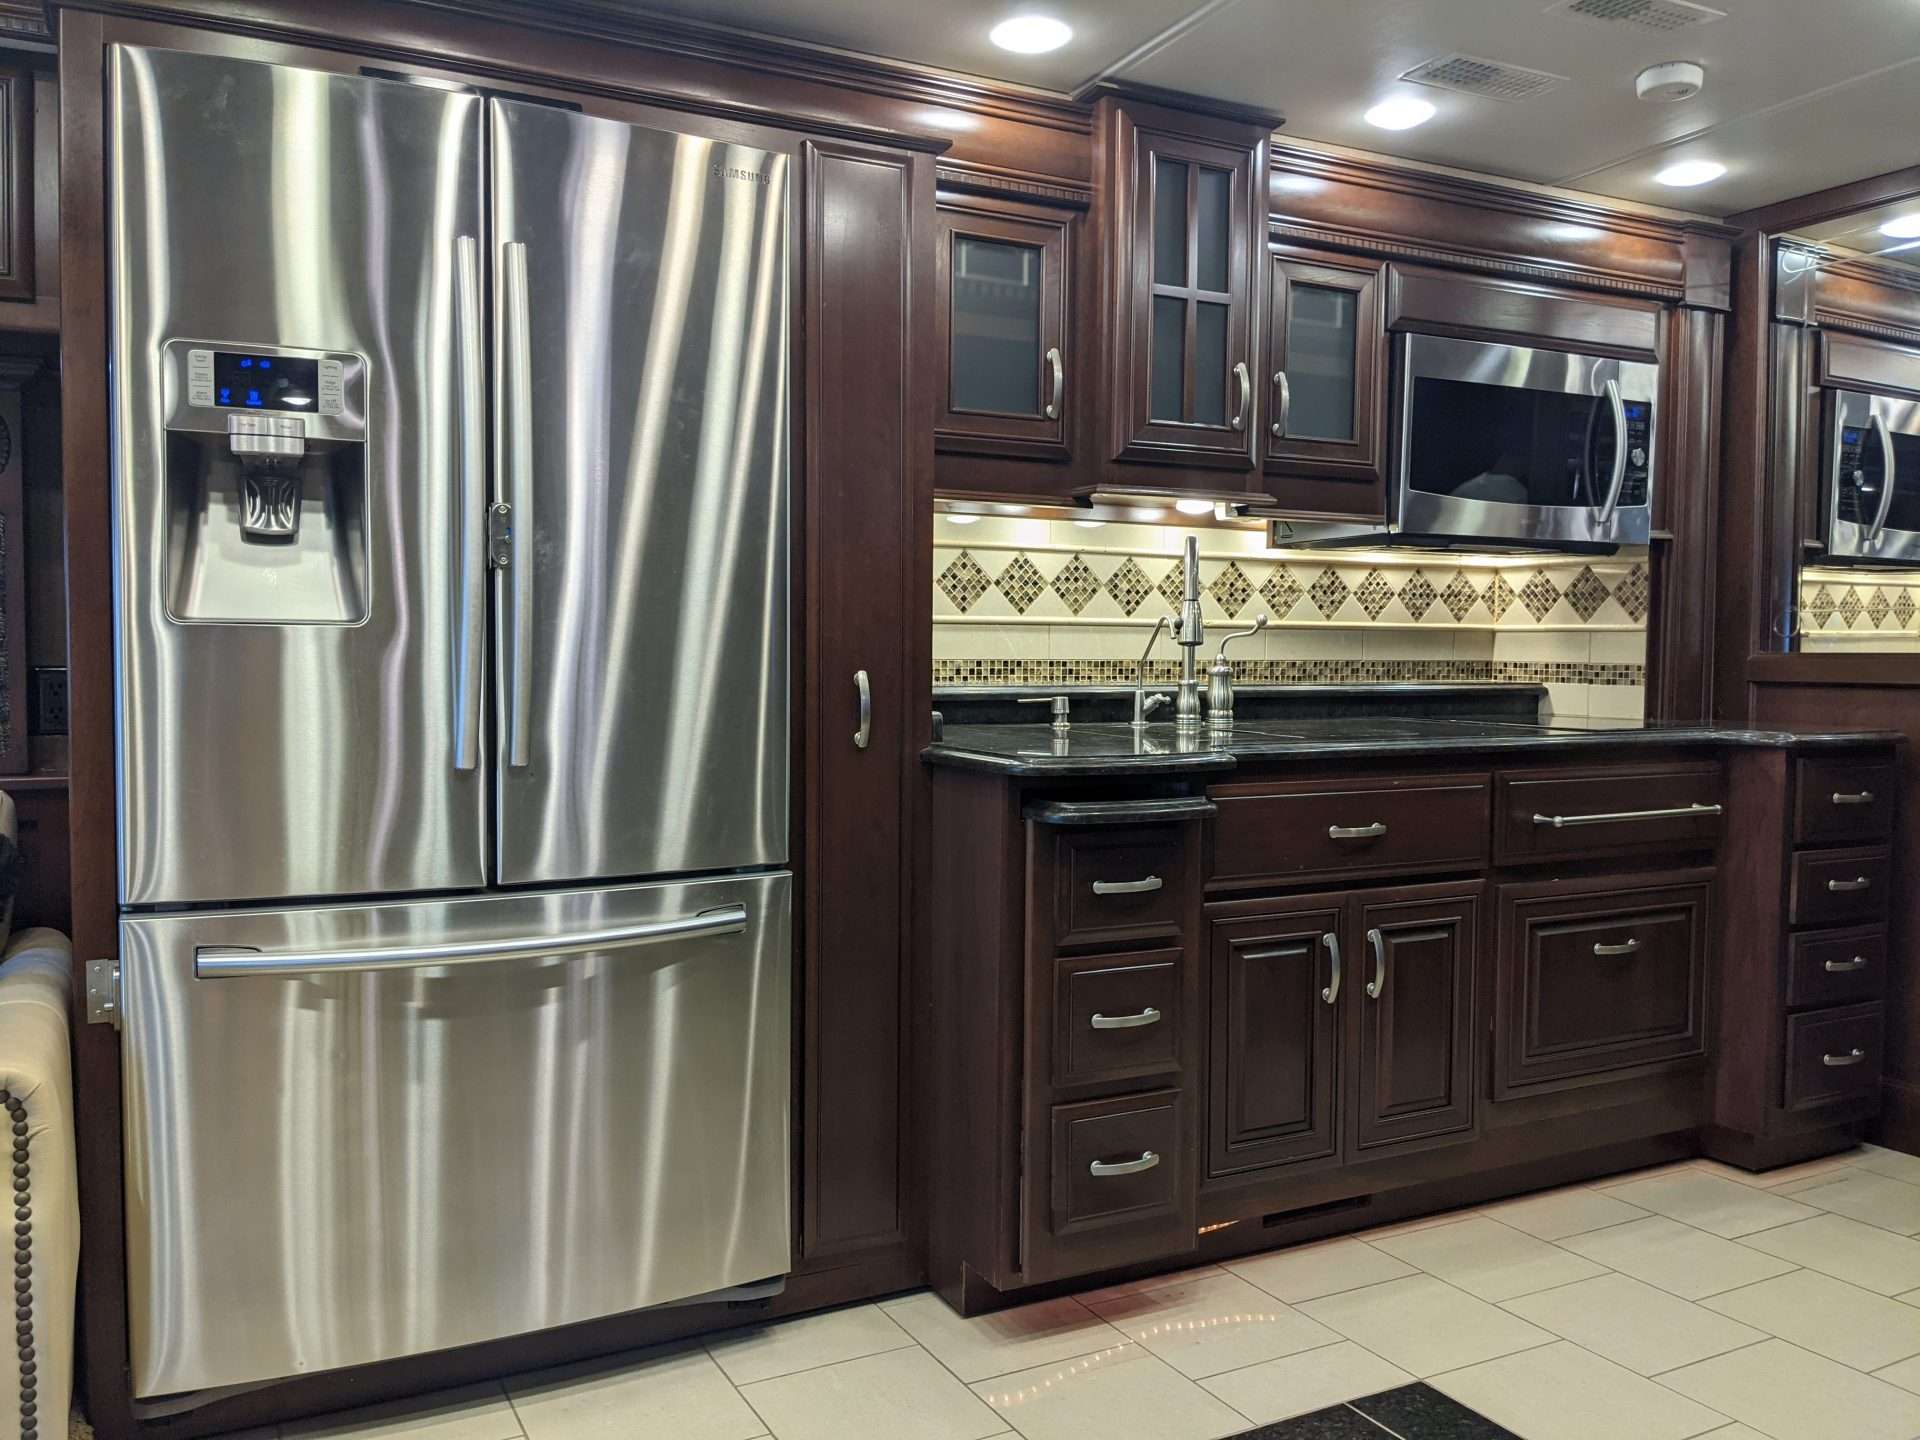 RV interior of kitchen with new fridge.